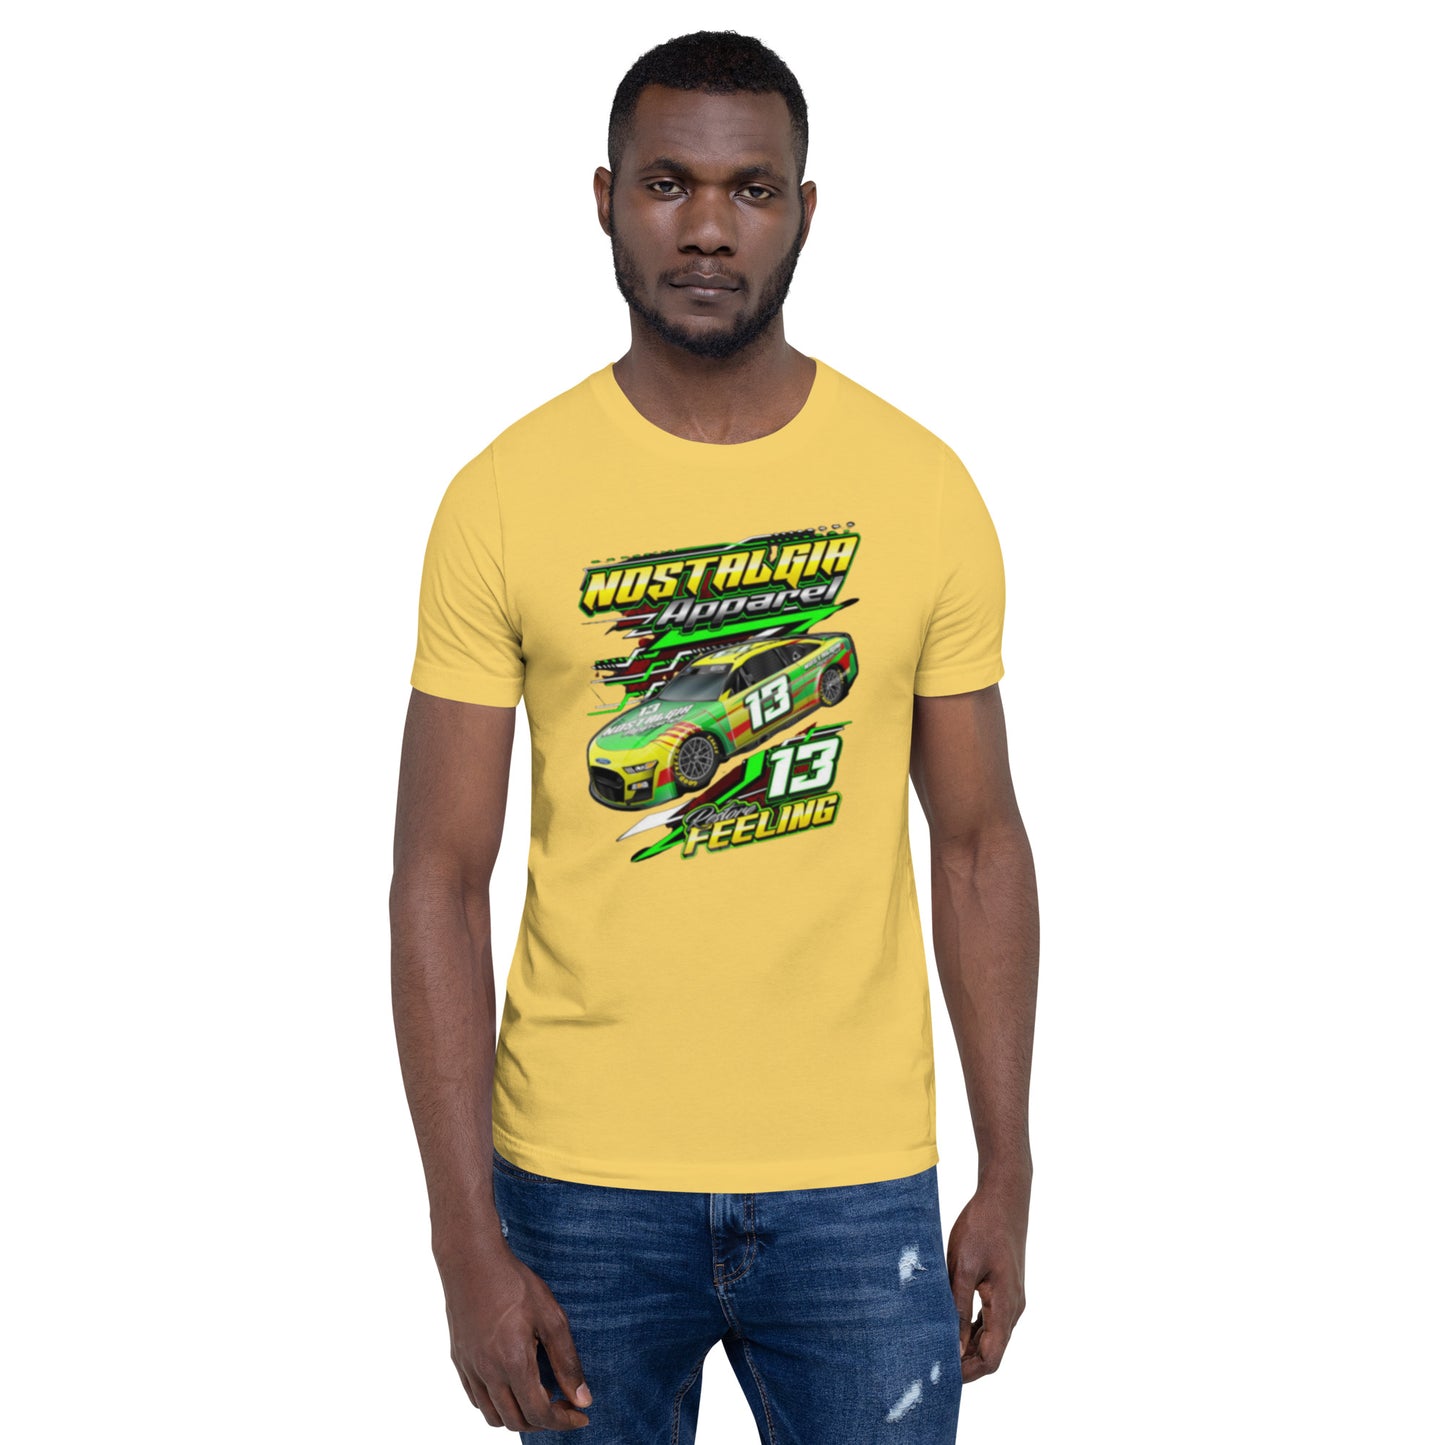 Nostalgia Race T-shirt